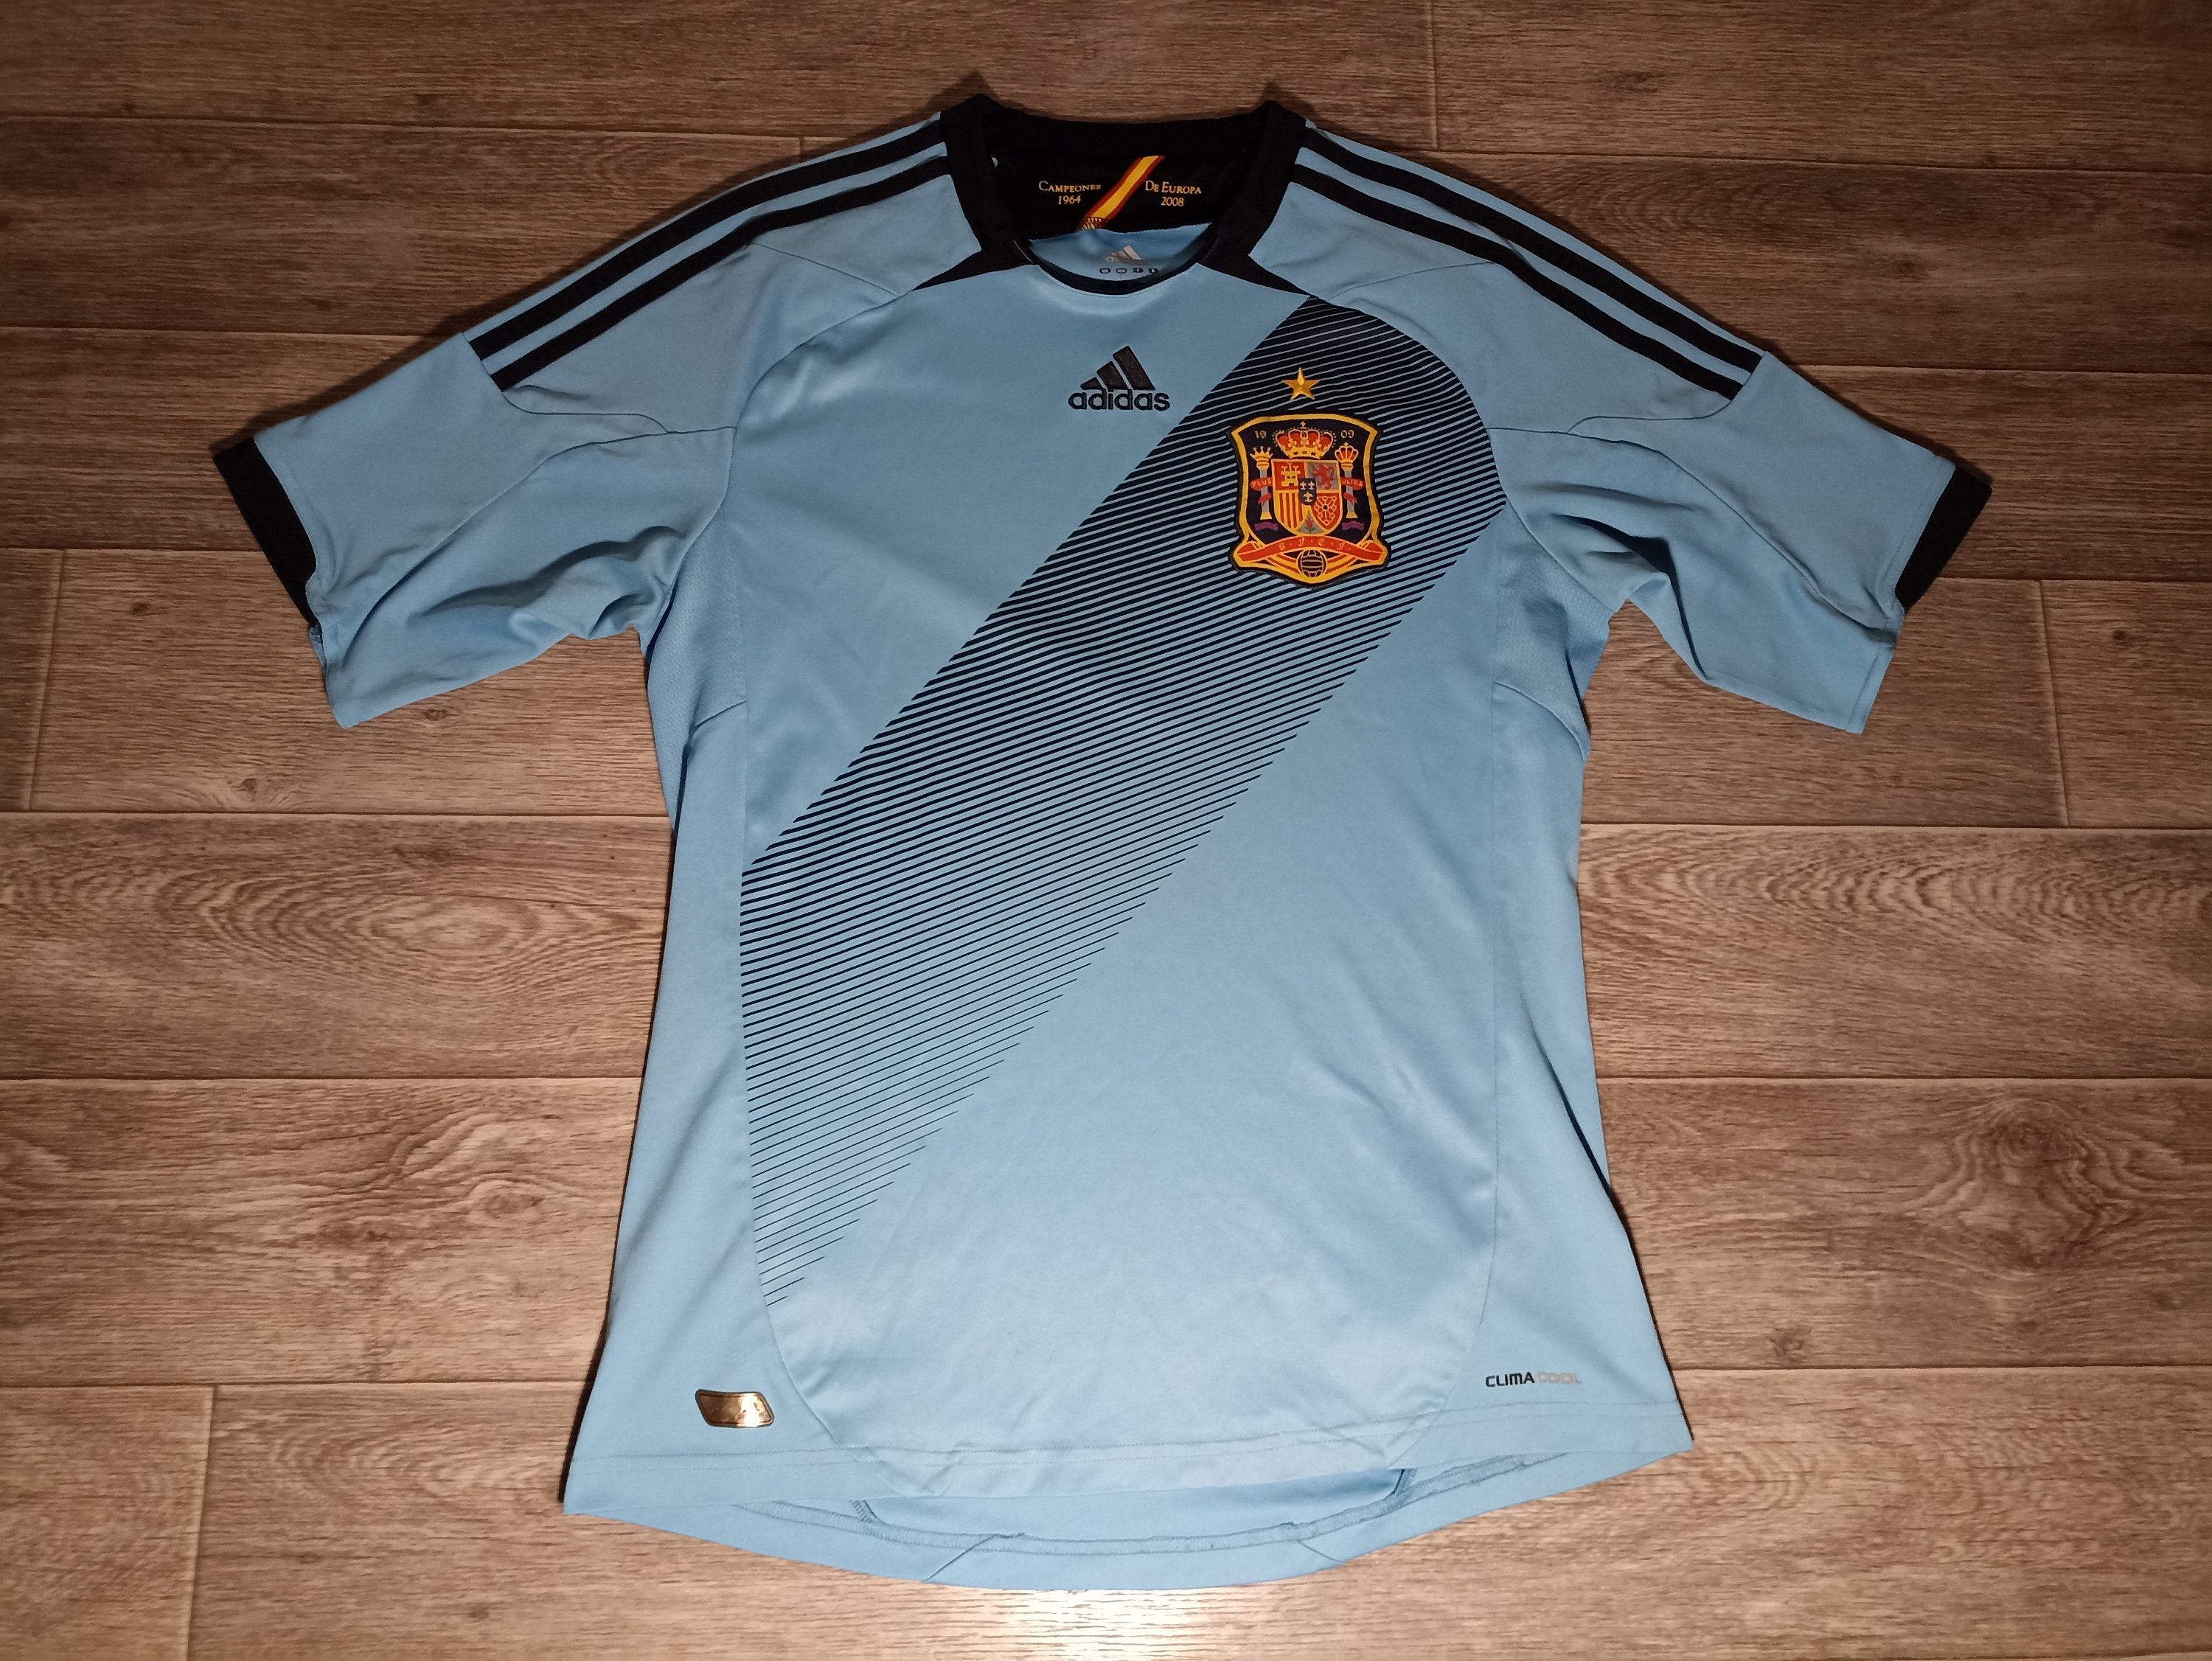 Fútbol Mundial Kits - Uruguay: Central Español F. C. - 2012/2013